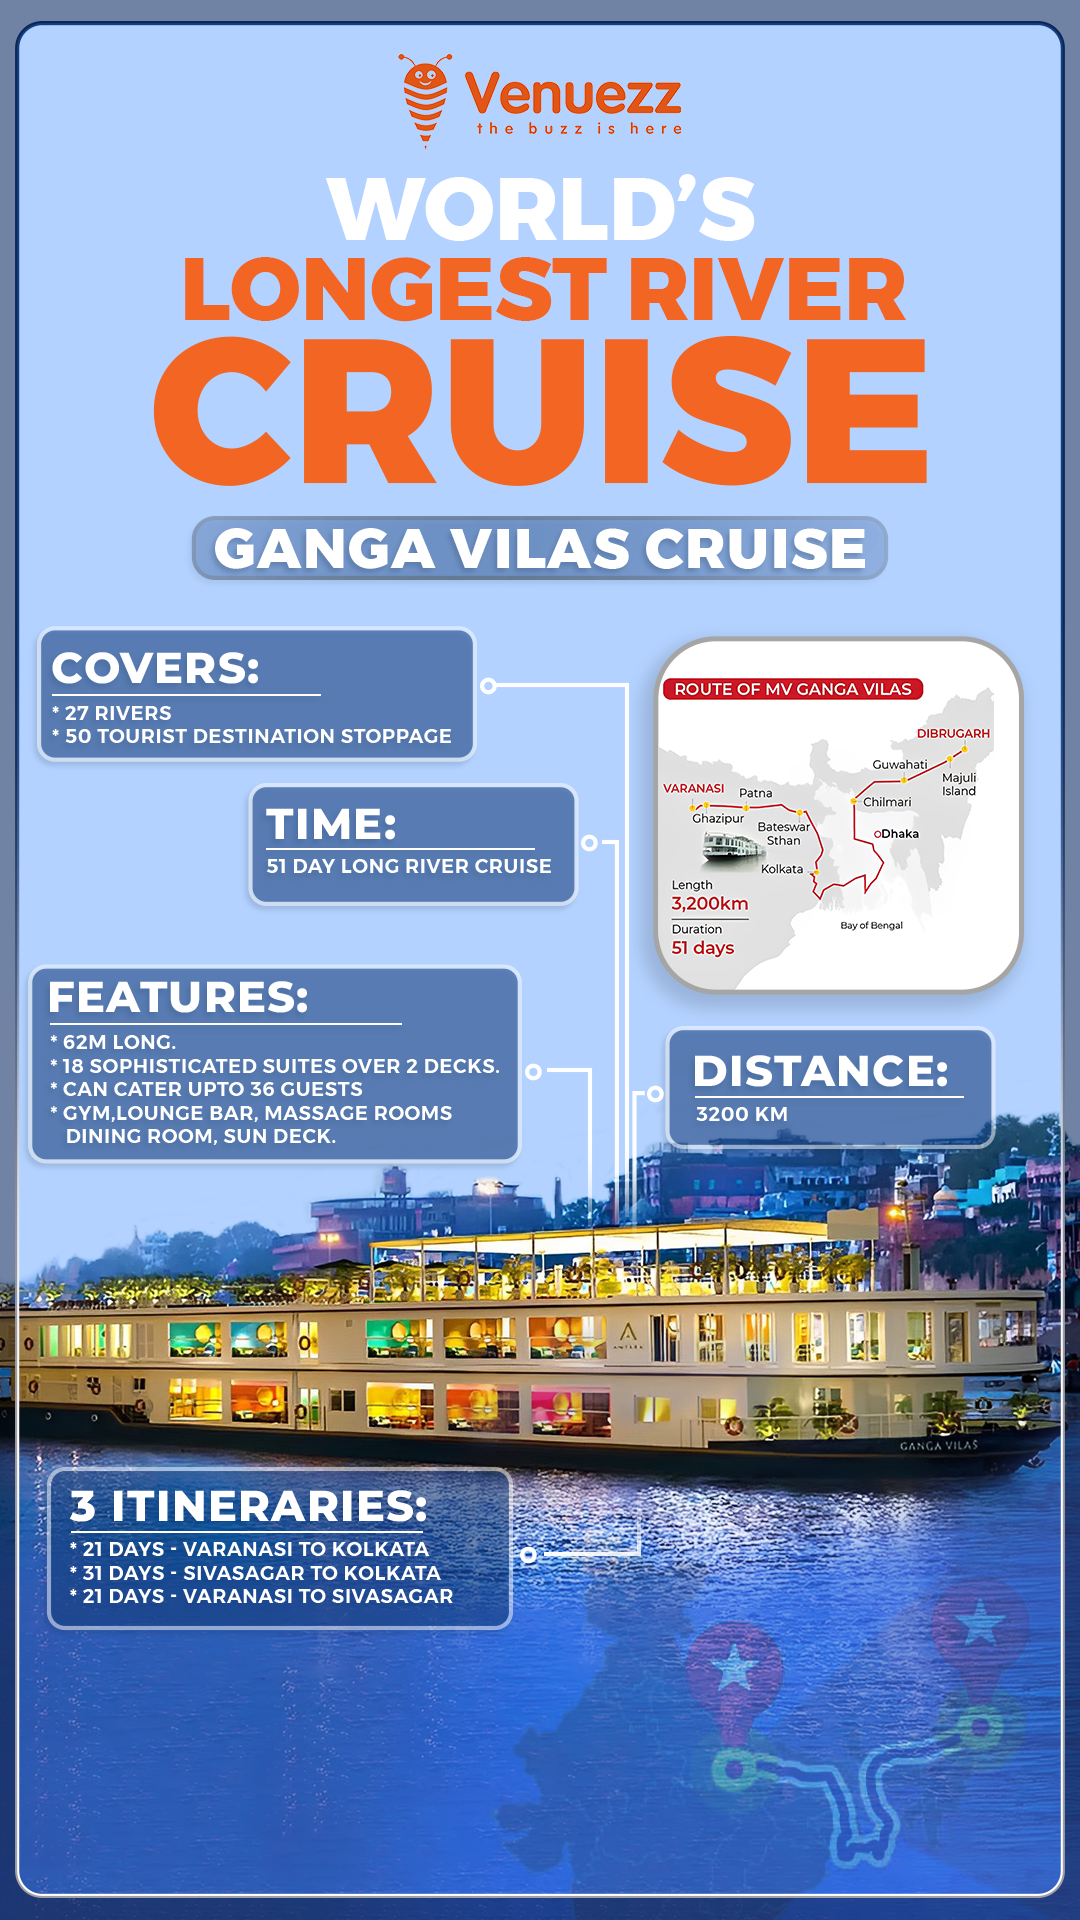 The Ganga Vilas Cruise_venuezz